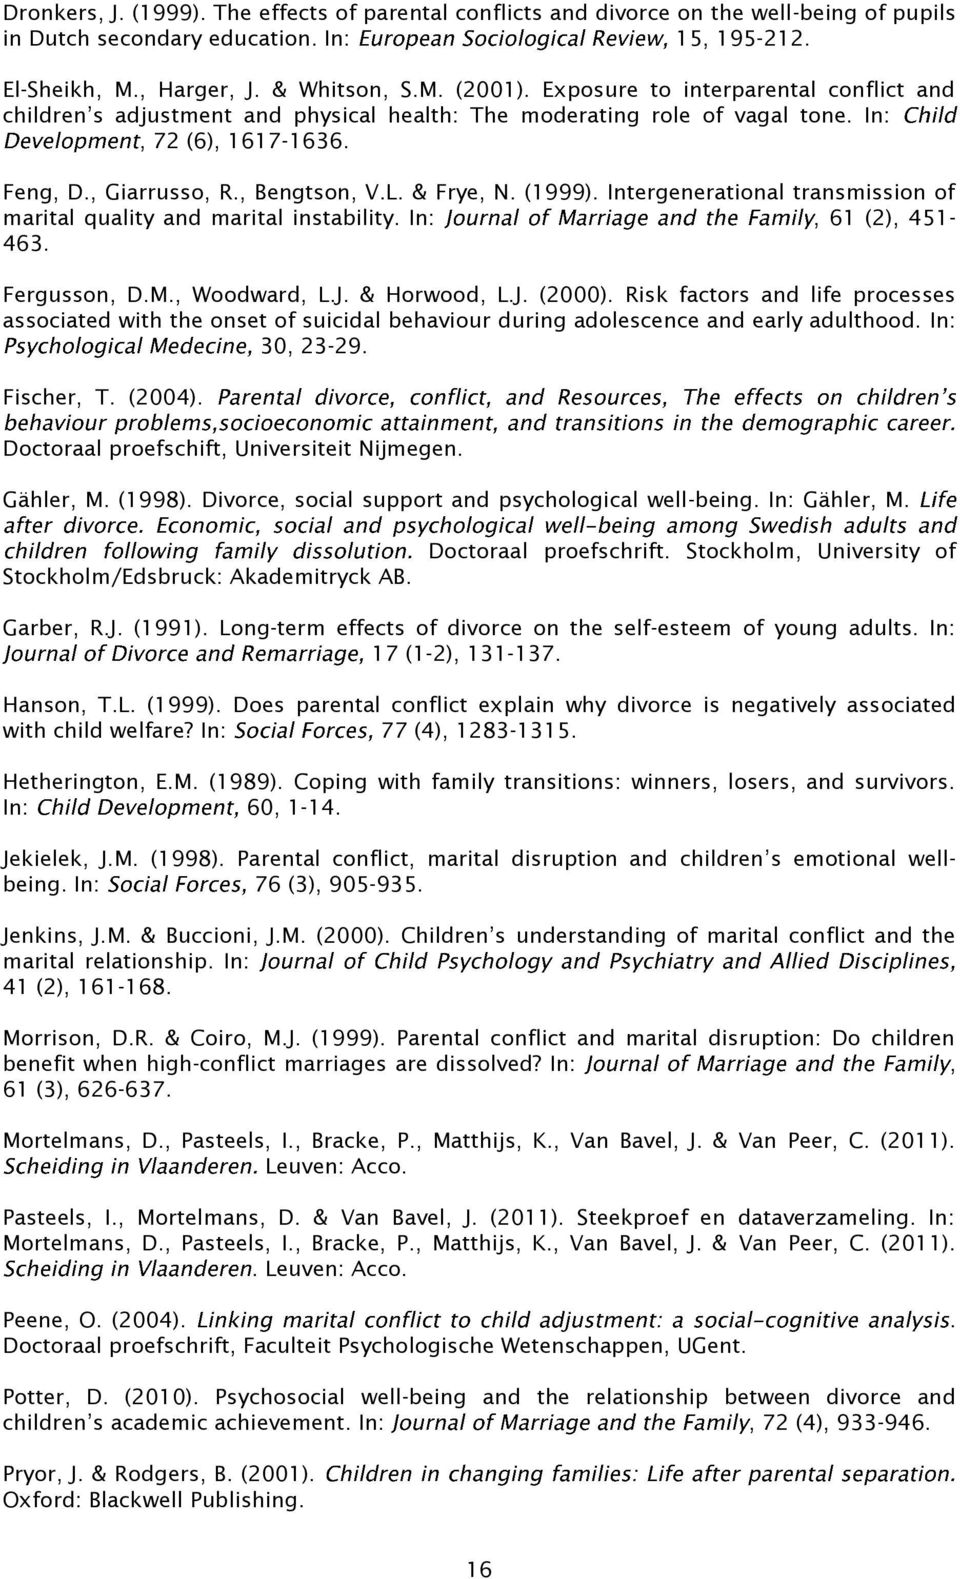 Intergenerational transmission of marital quality and marital instability. In:, 61 (2), 451-463. Fergusson, D.M., Woodward, L.J. & Horwood, L.J. (2000).